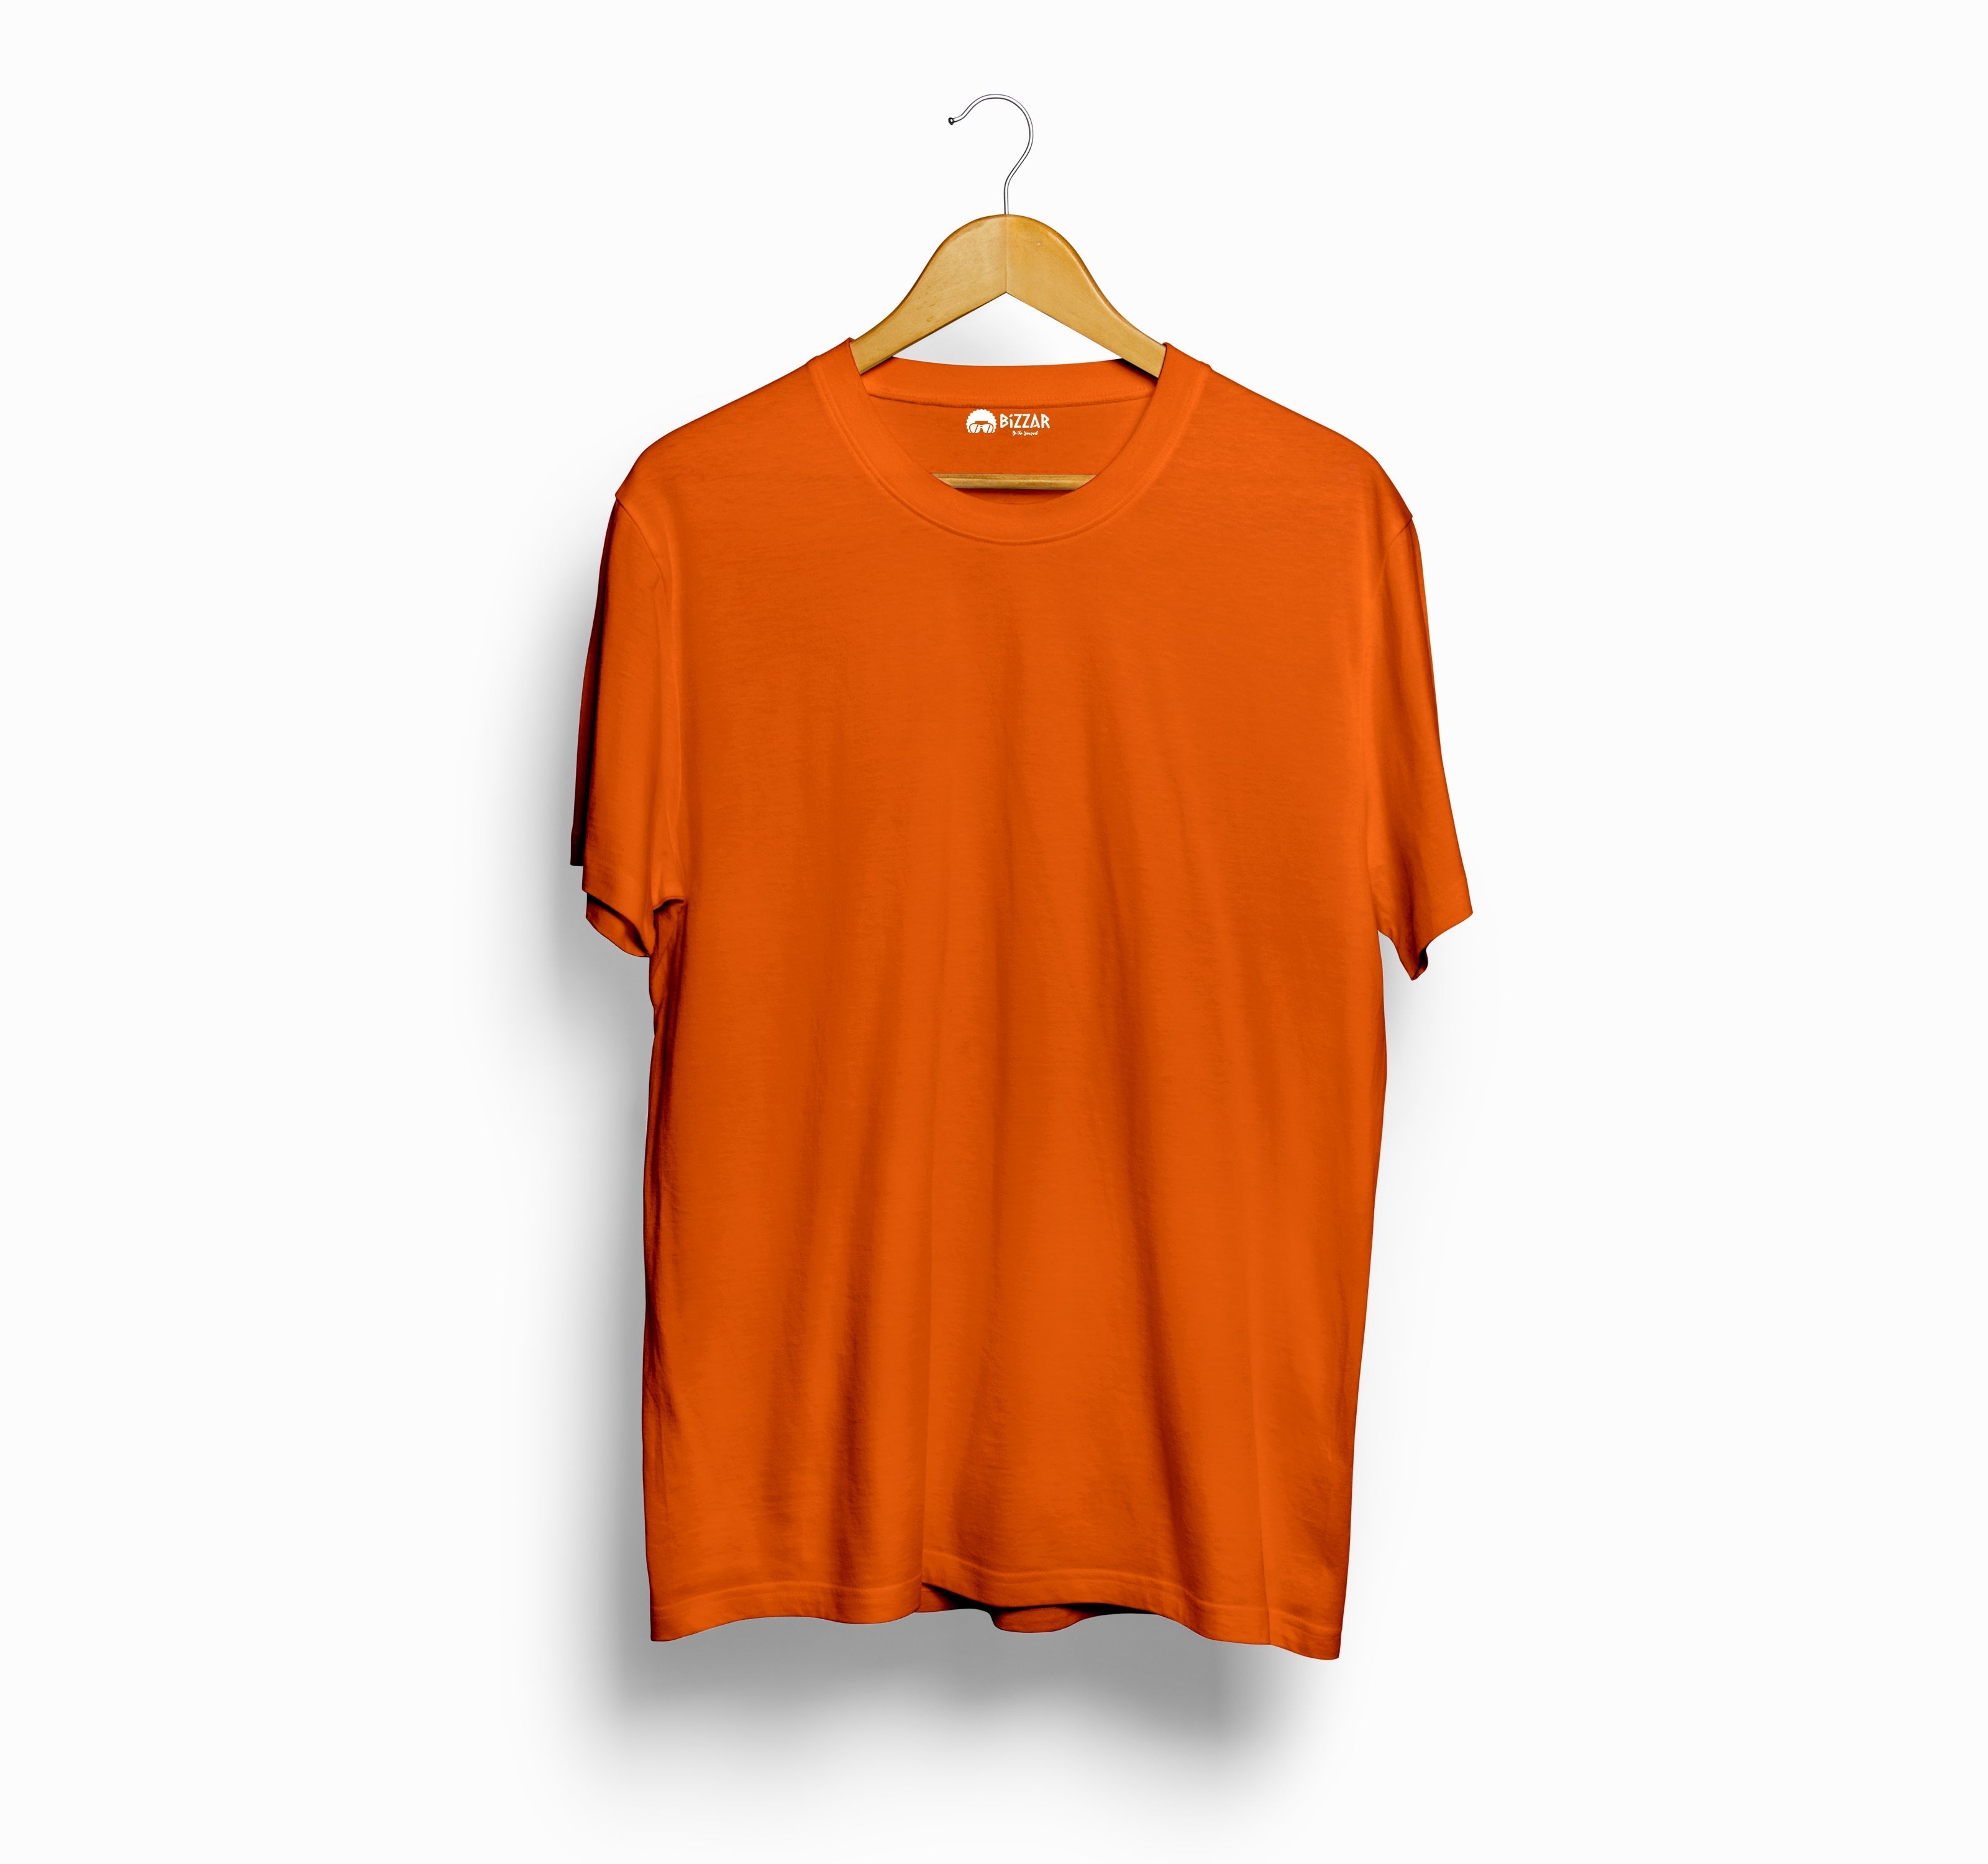 Bizzar Orange T-Shirt